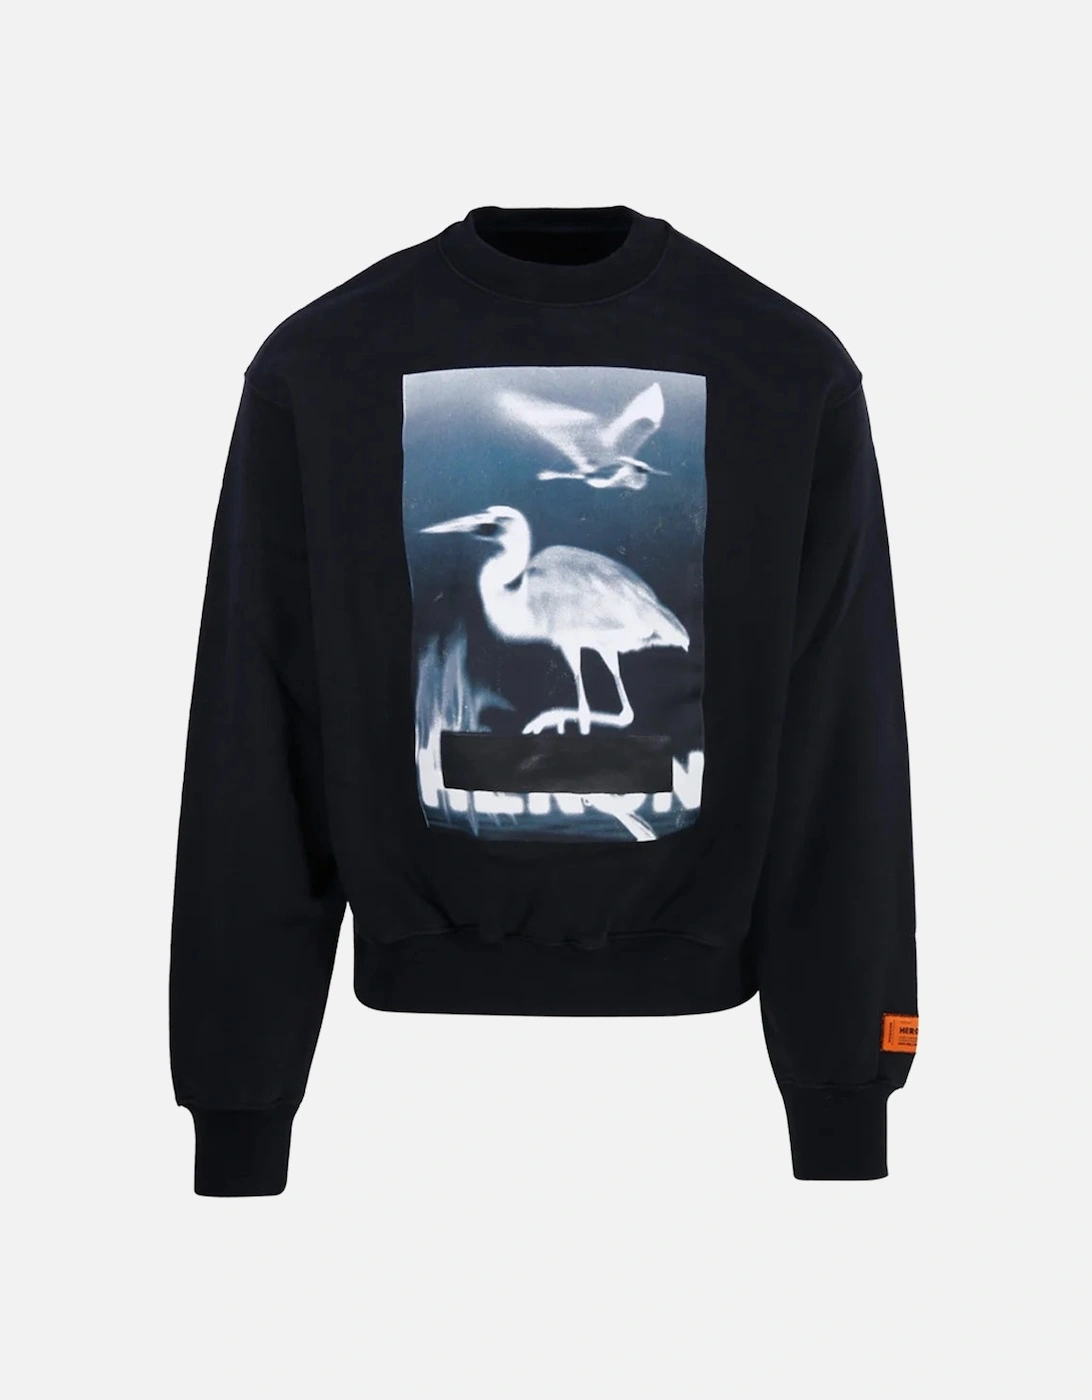 Censored Heron Crewneck Sweatshirt in Black, 3 of 2